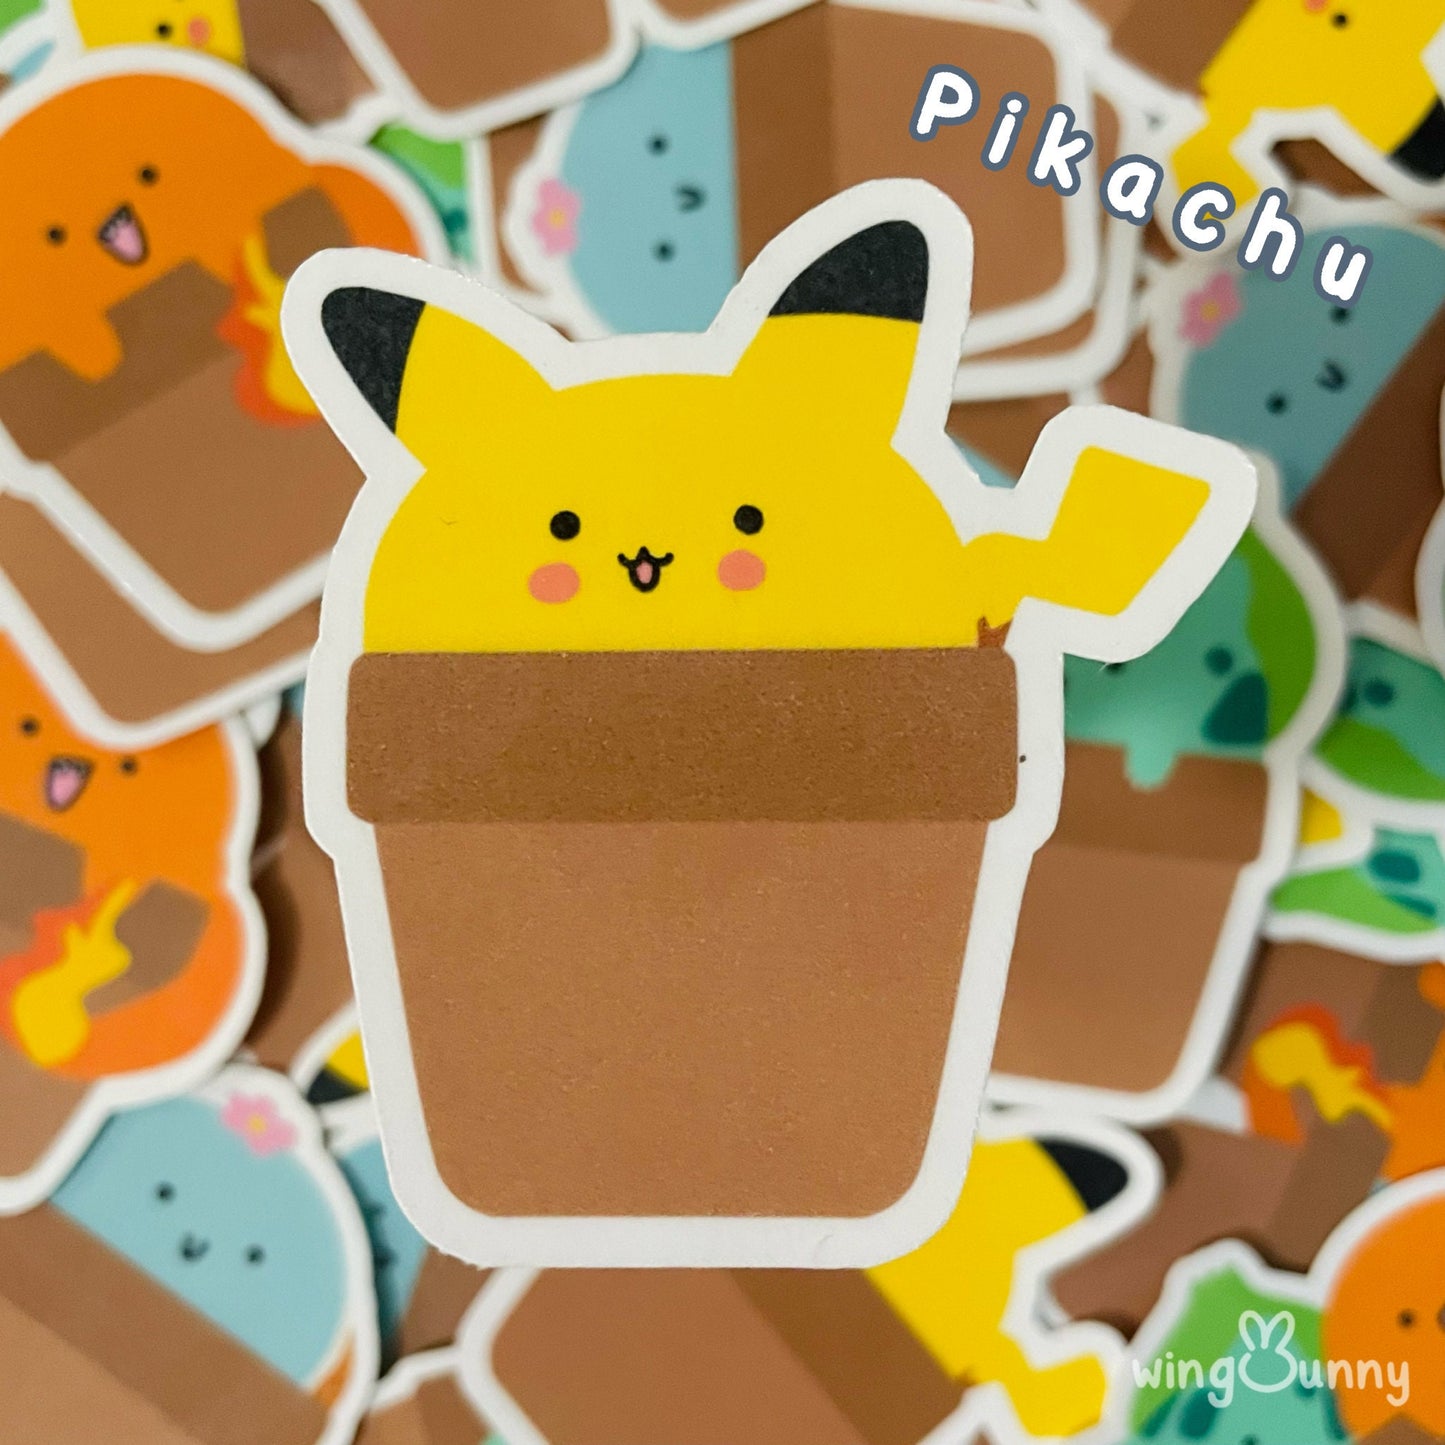 PokéPlants Sticker, First Generation Starter Pokemon